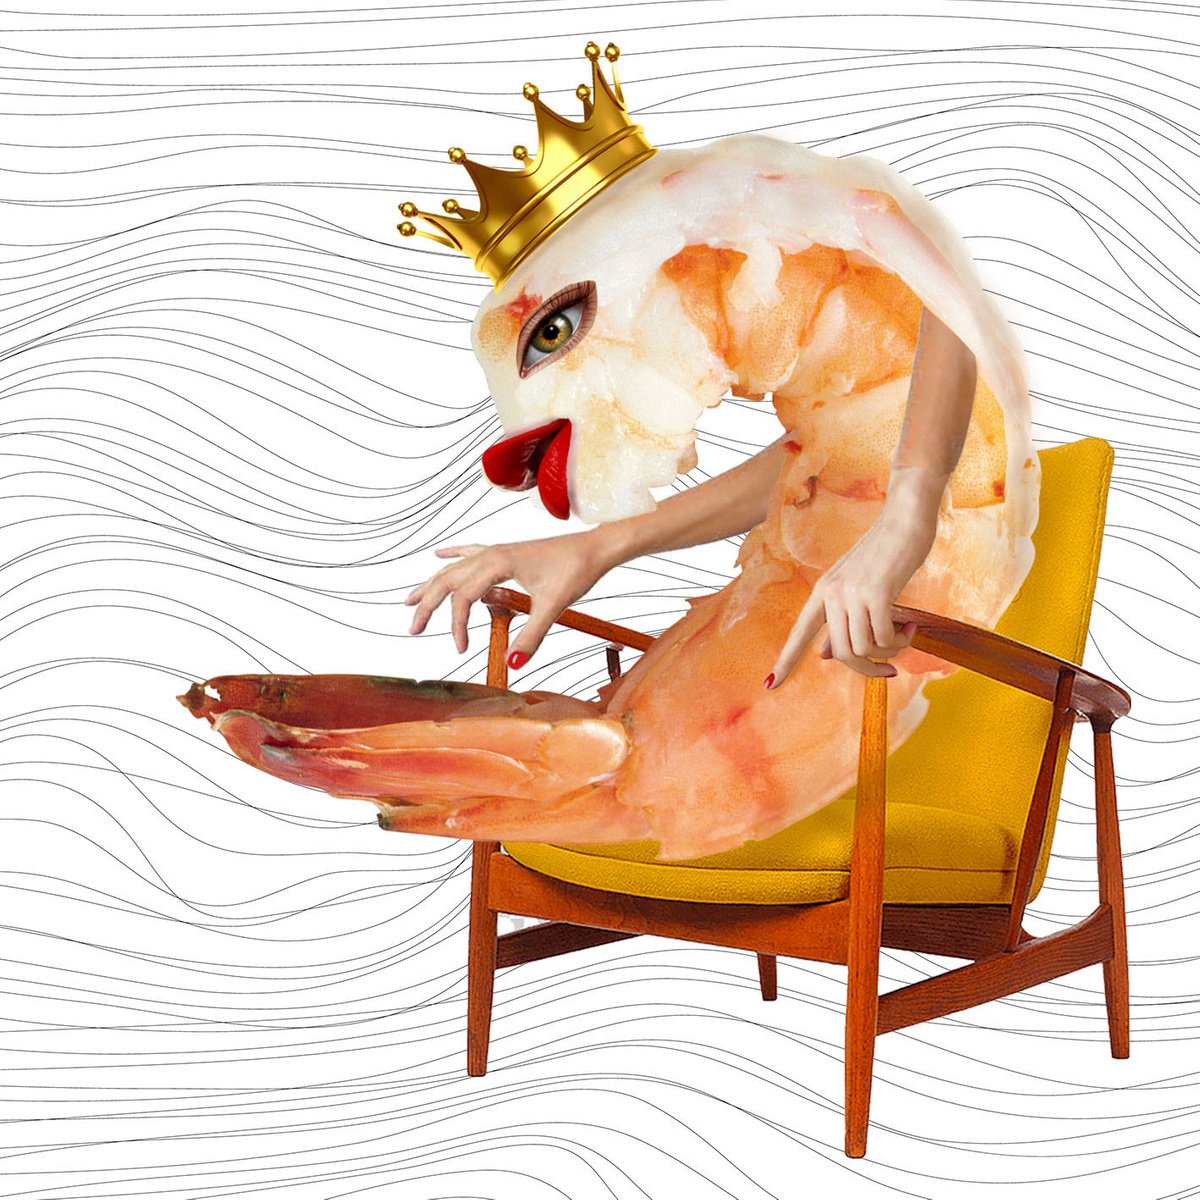 King prawn and chair by Olga Sennikova